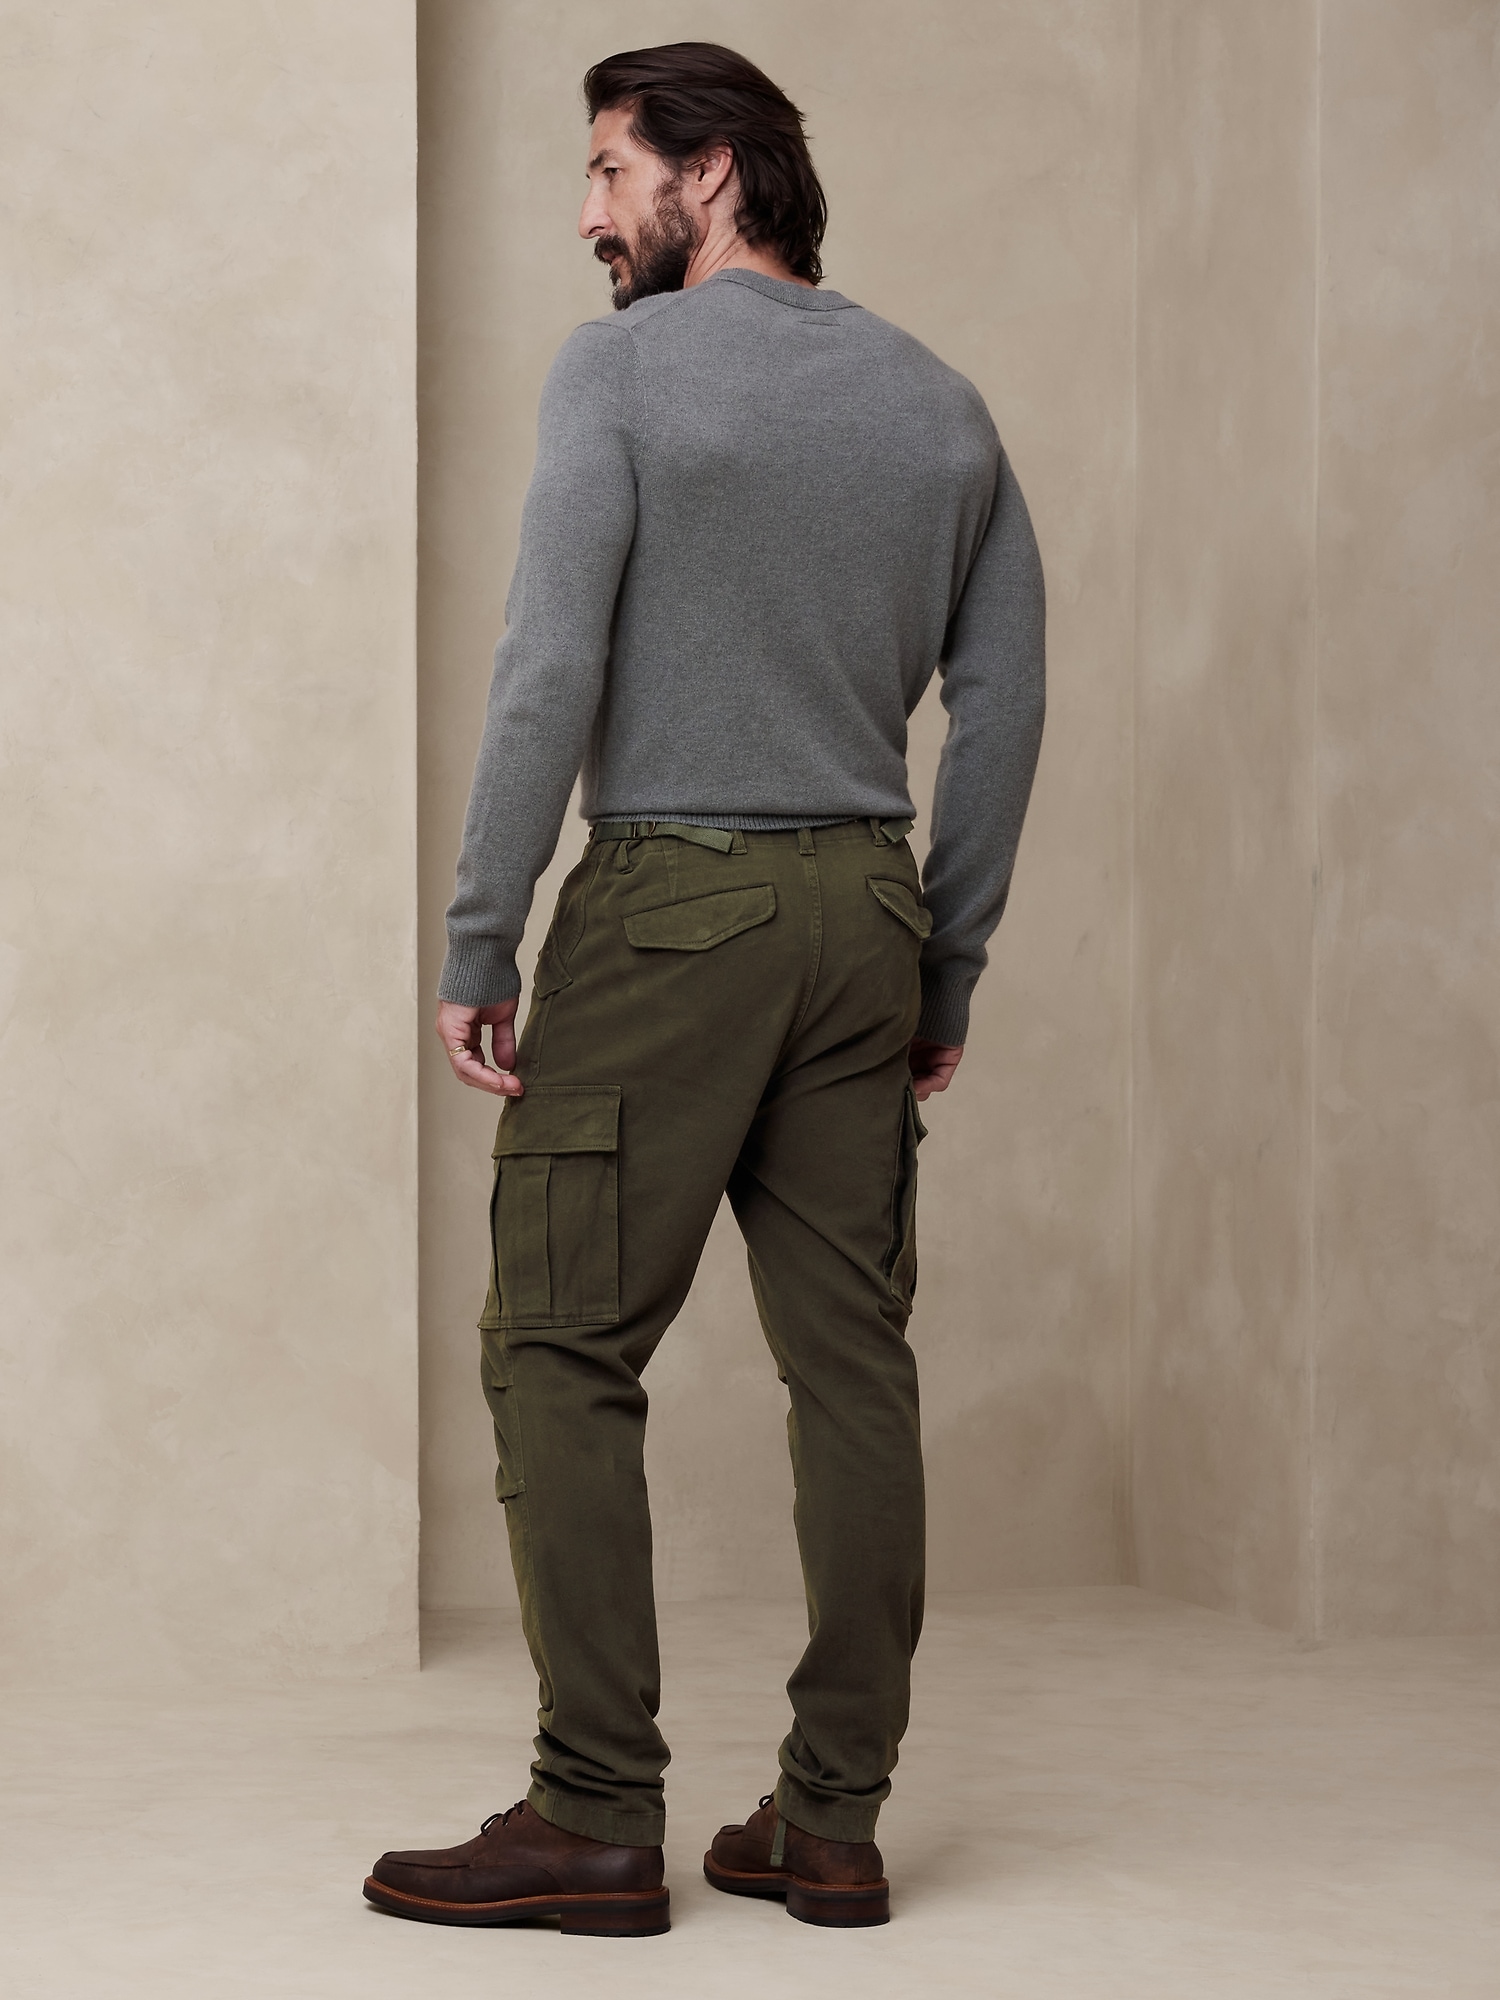 Olive Green Multi-Pocket Girls Cargo Pants Plus Size